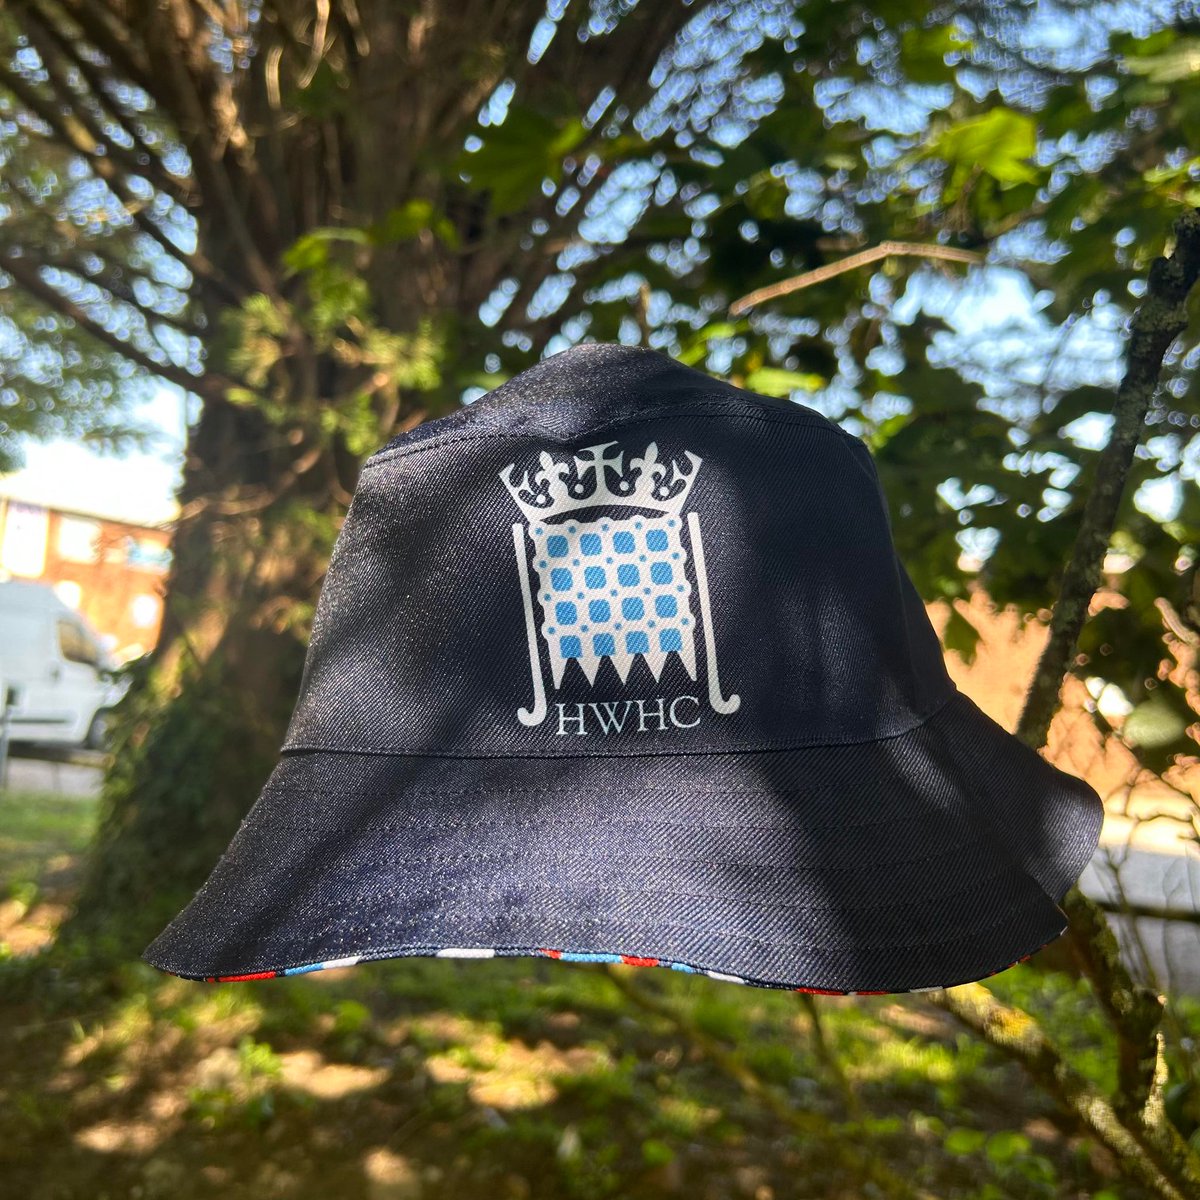 Its Bucket Hat Season ☀️😎

We created these reversible bucket hats for Hampstead & Westminster Hockey Club.

Swipe to see the other way, mood dependant 😉👀

#hwhc #buckethats #teamsport #hockey #sports #hawkinsport